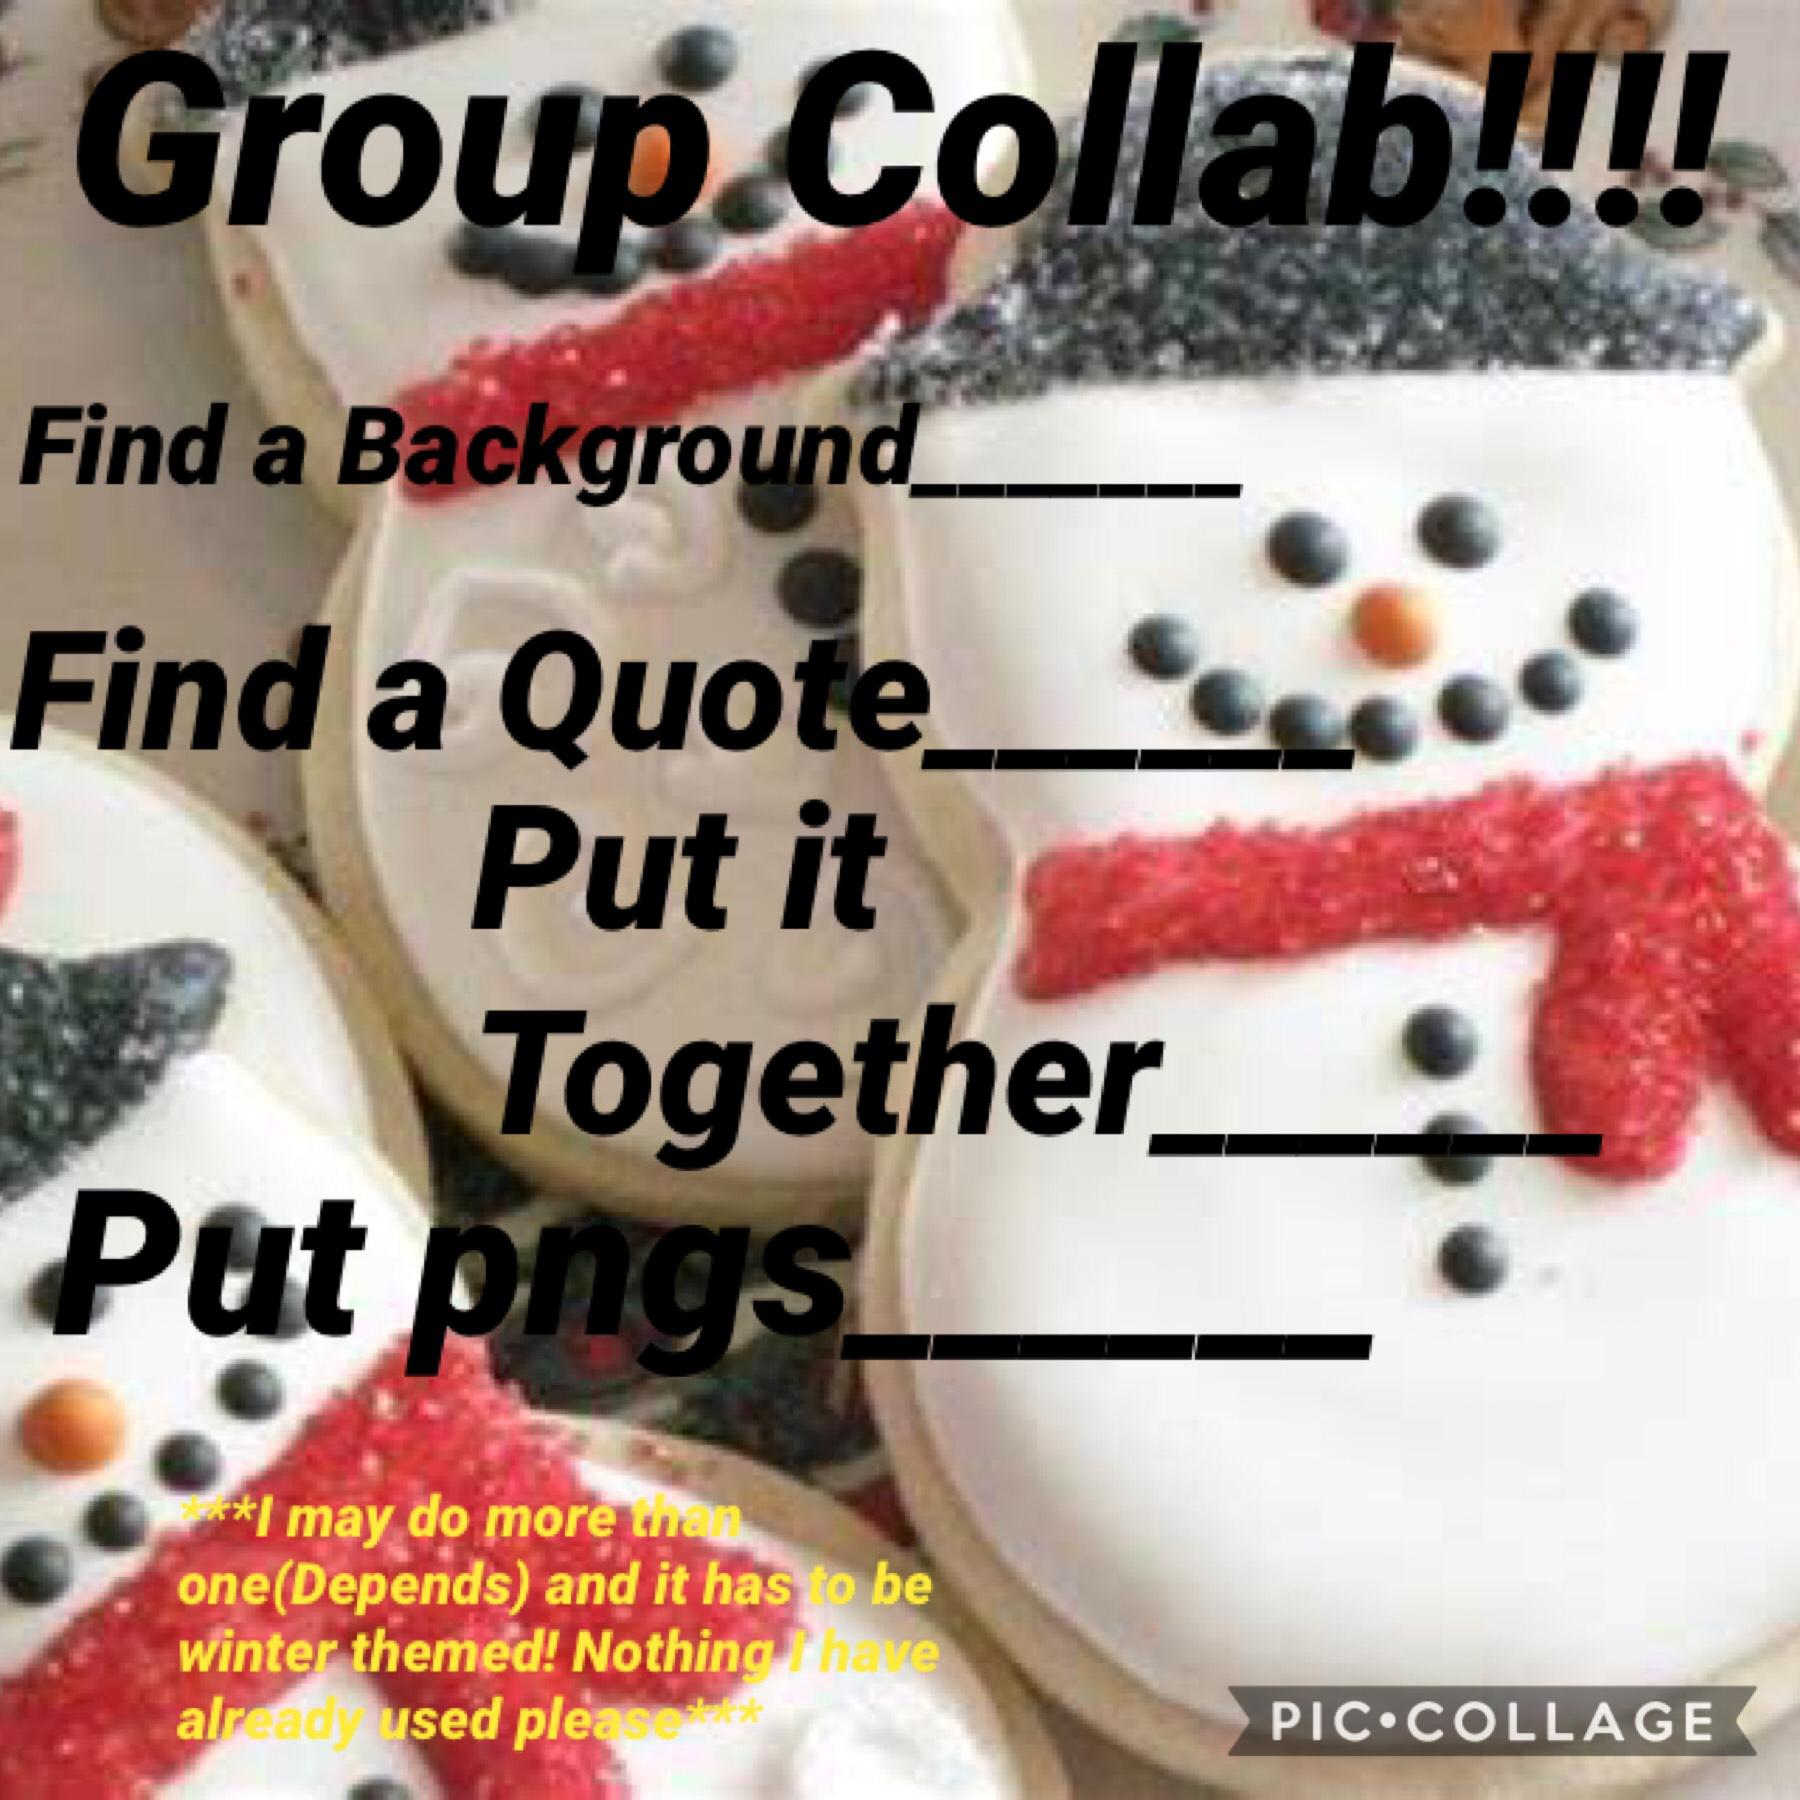 Group Collab anyone?